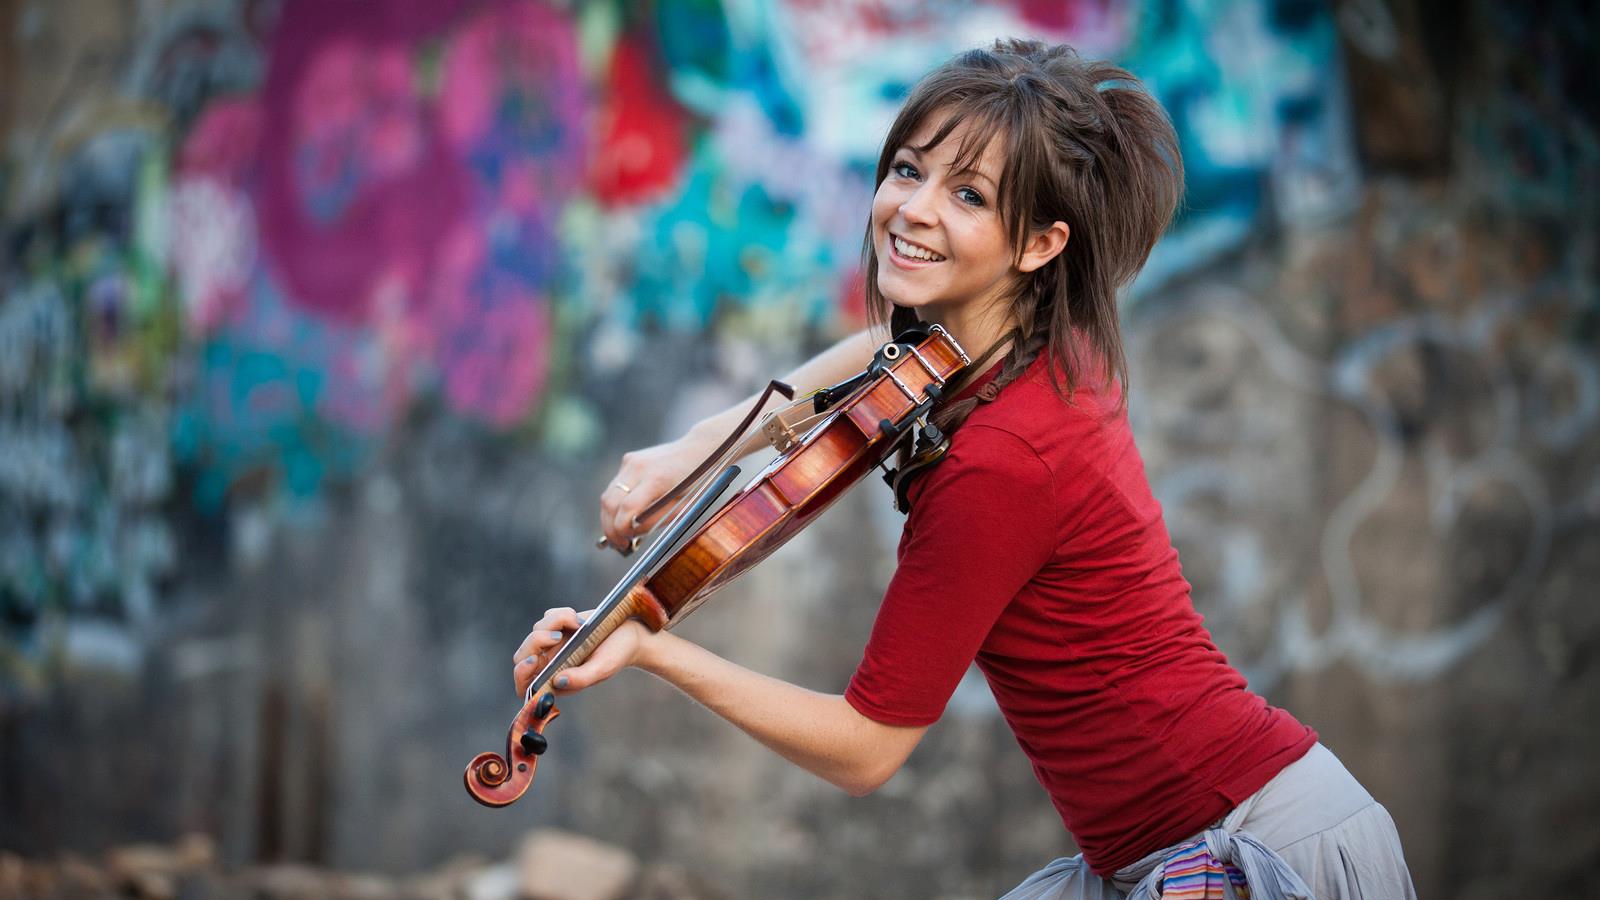 Dubstep Violinist Lindsey Stirling Made $6 Million From YouTube.